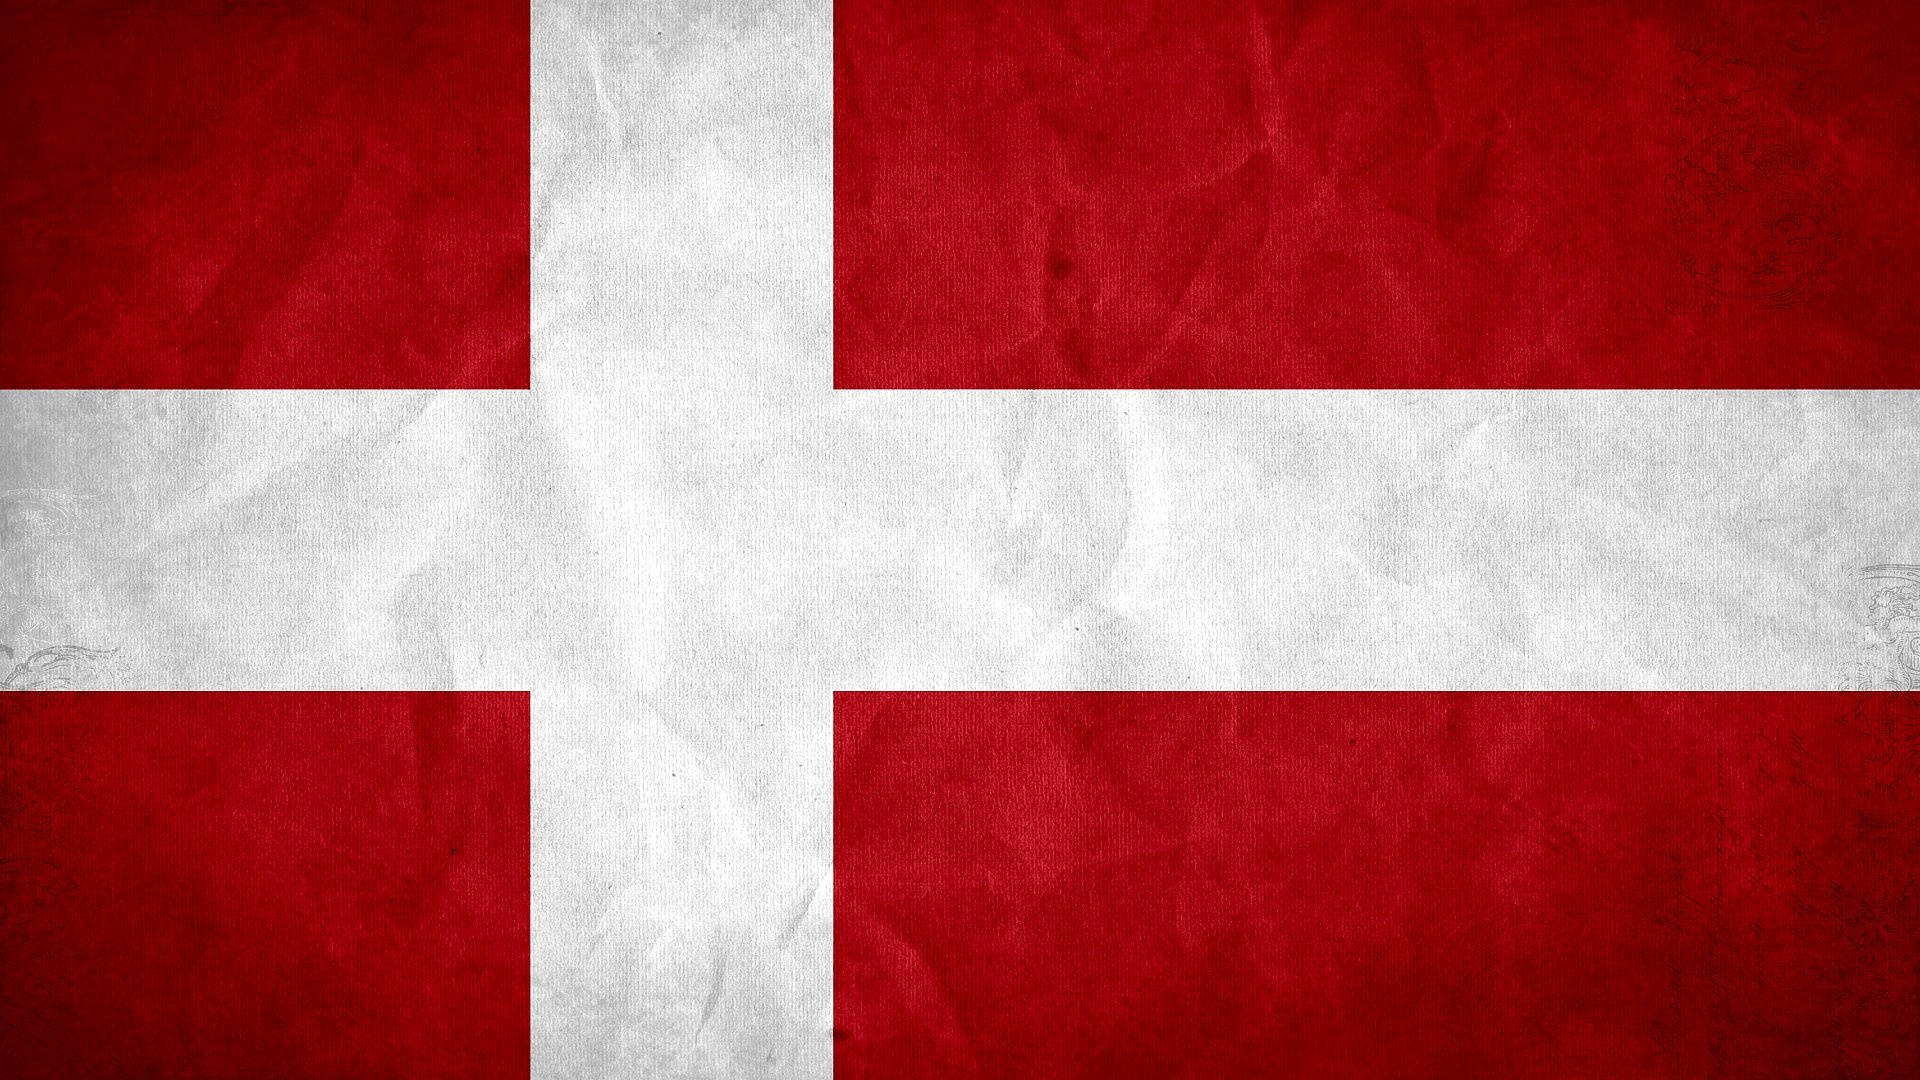 Danish flag symbol, HD wallpapers, Eye-catching design, National pride, 1920x1080 Full HD Desktop